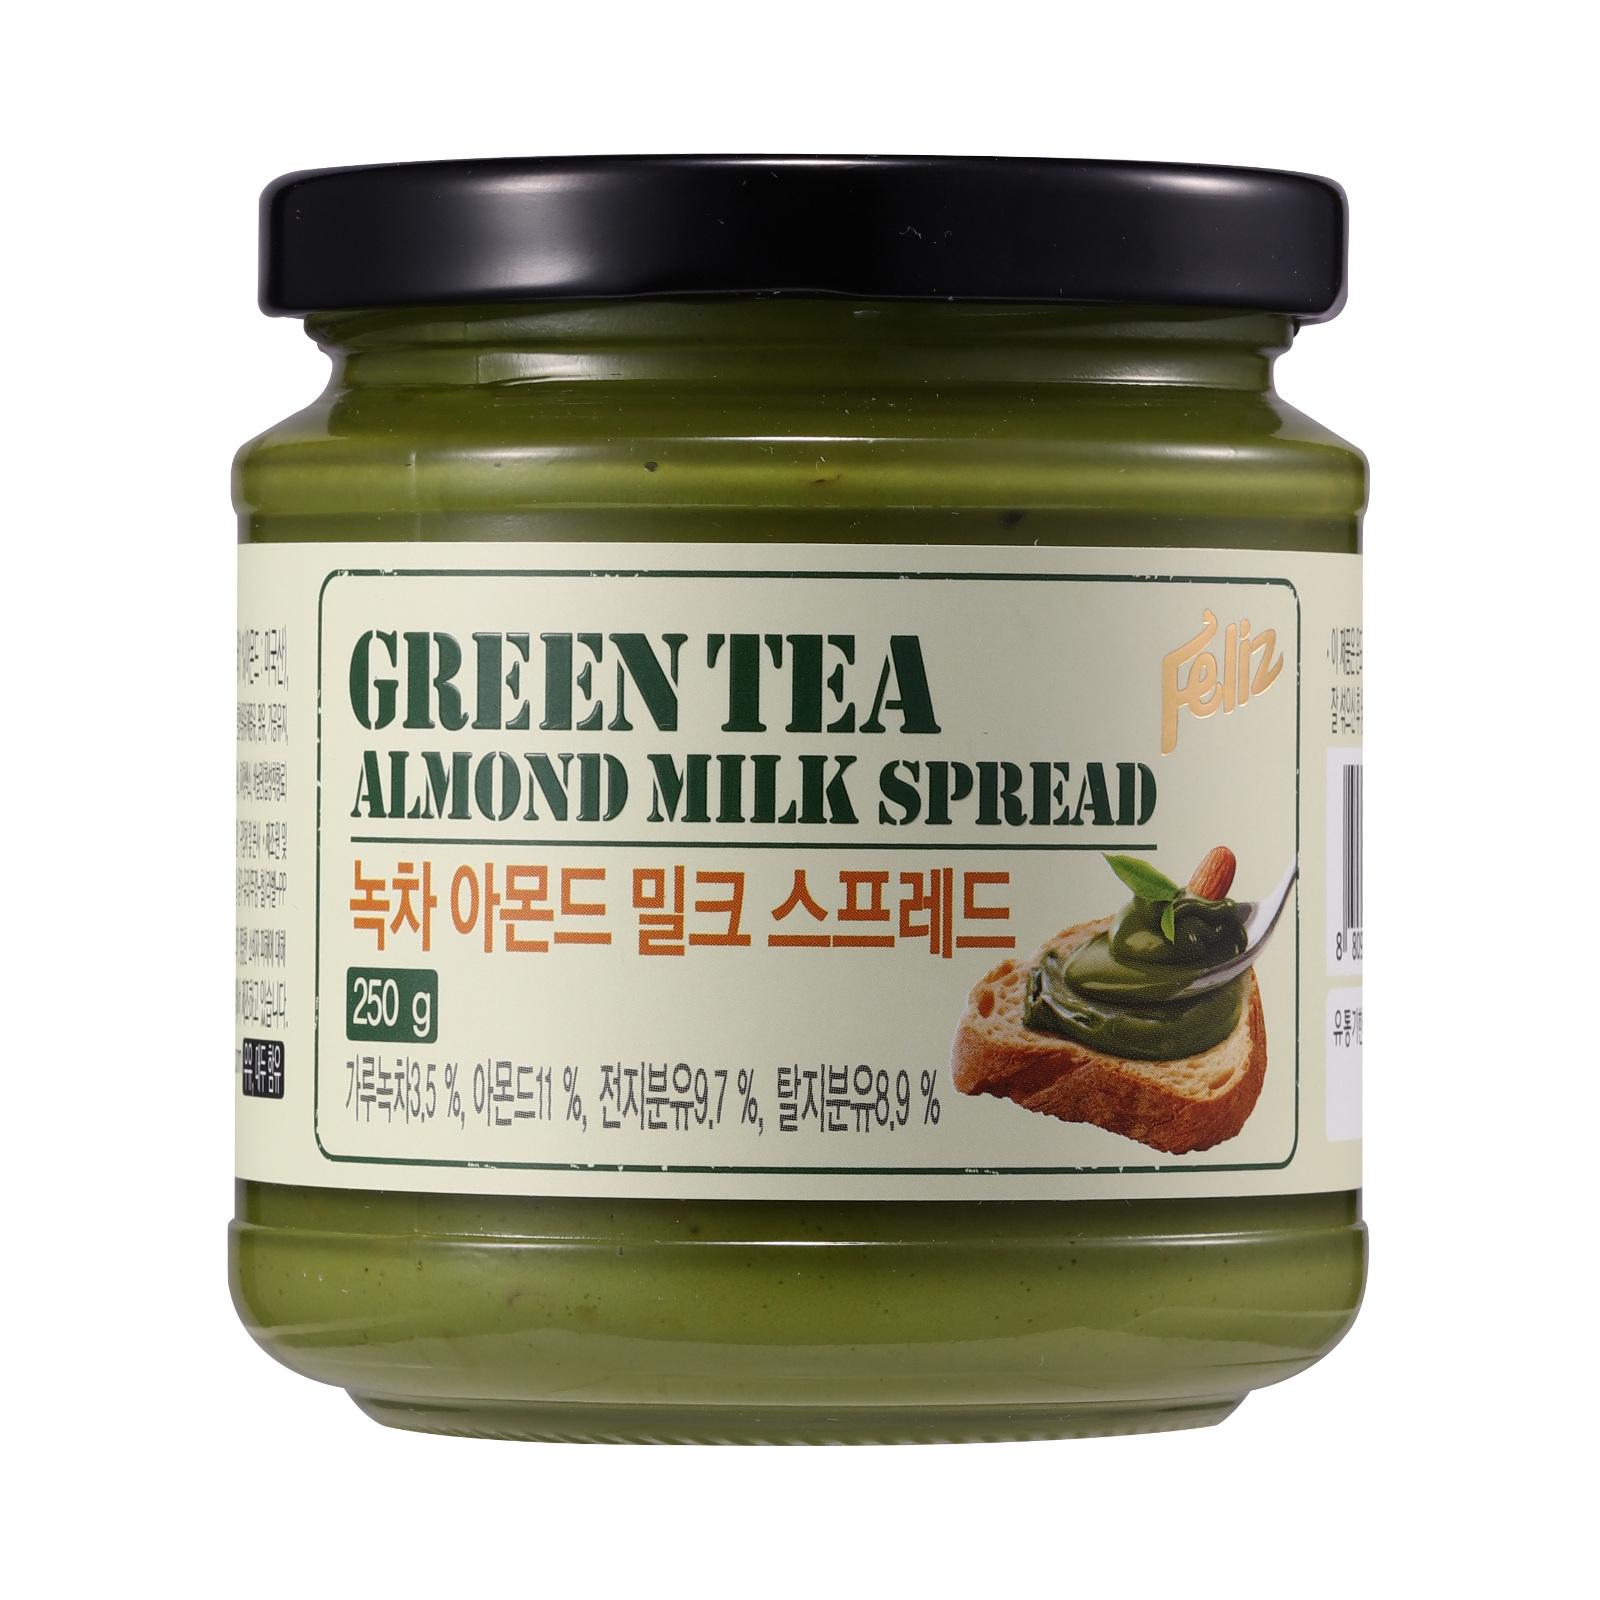 FELIZ GREEN TEA Almond Milk Spreads (Korea Imported) เฟลิส มิลค์ กรีนที ผสมอัลมอนด์ สเปรด 250g.